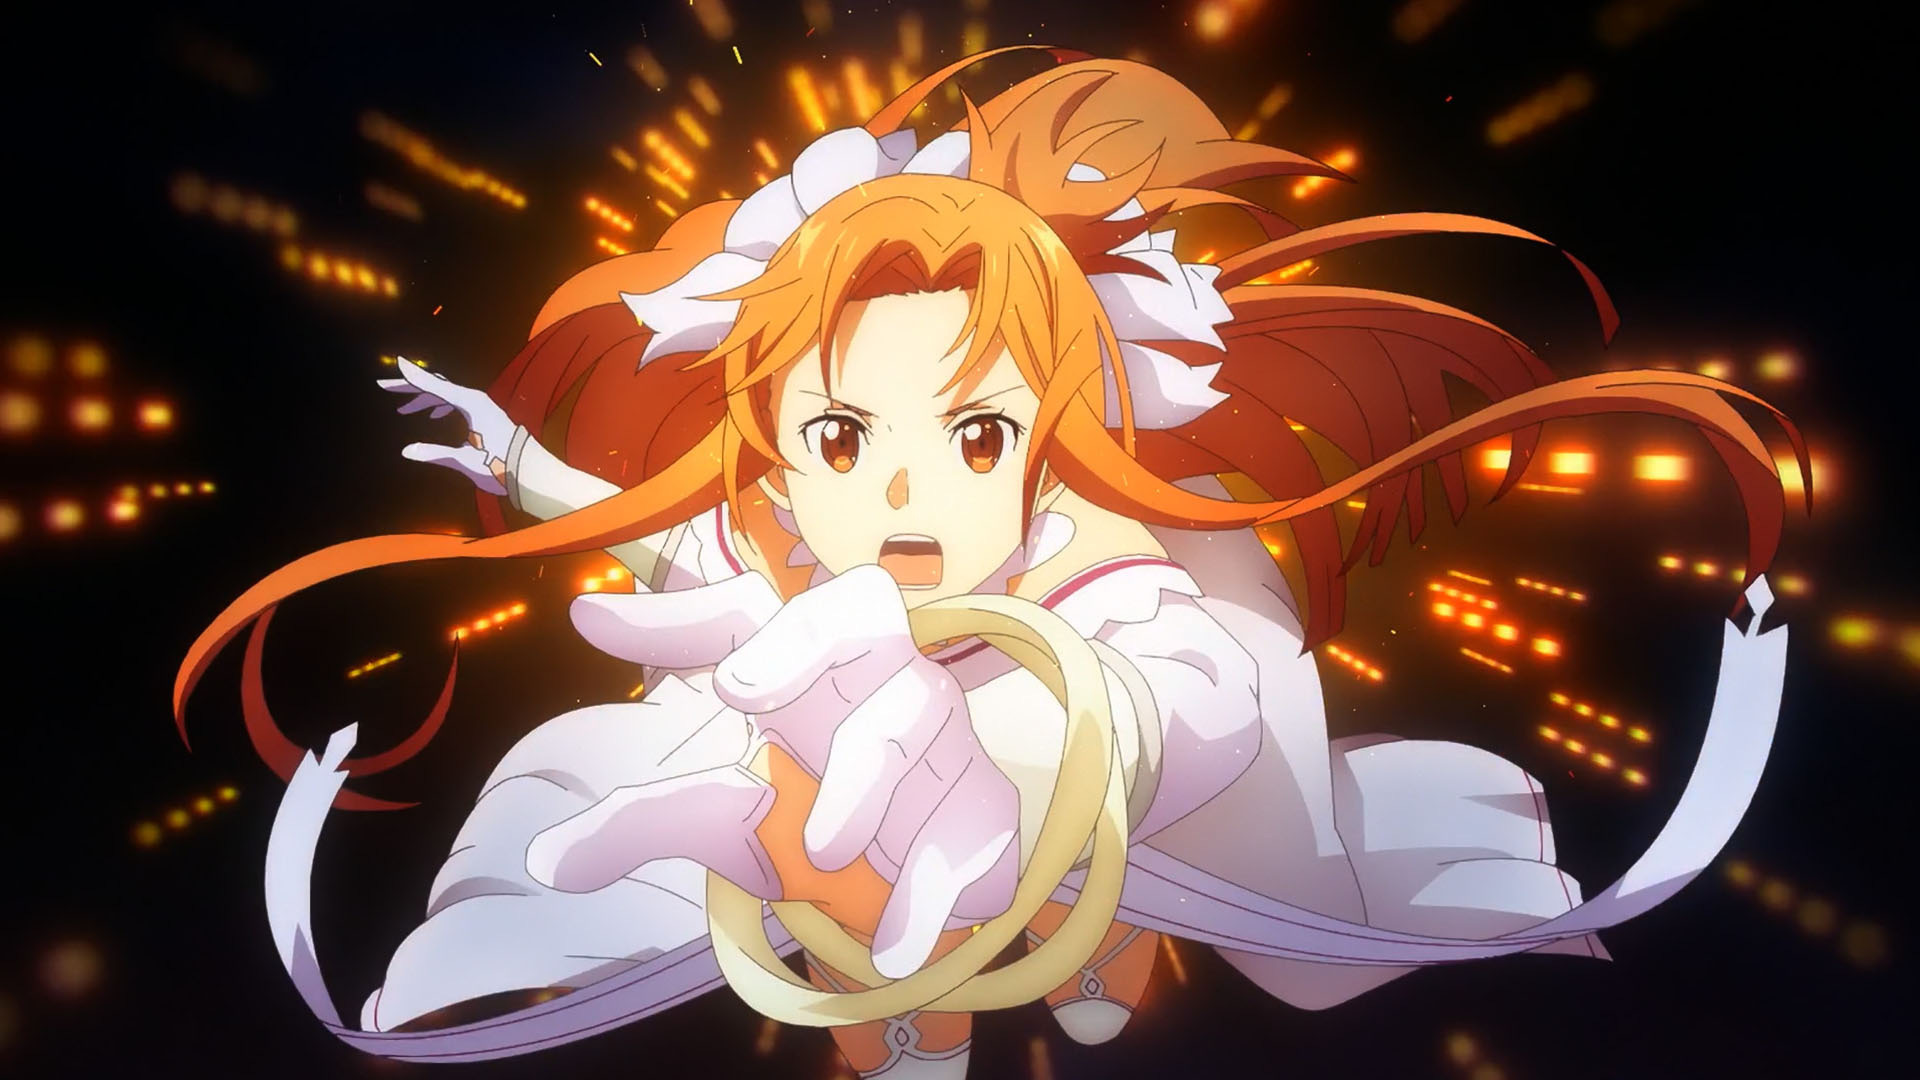 Tóm Tắt Anime Hay: Đao Kiếm Thần Vực Season 3 (P4) - Sword Art